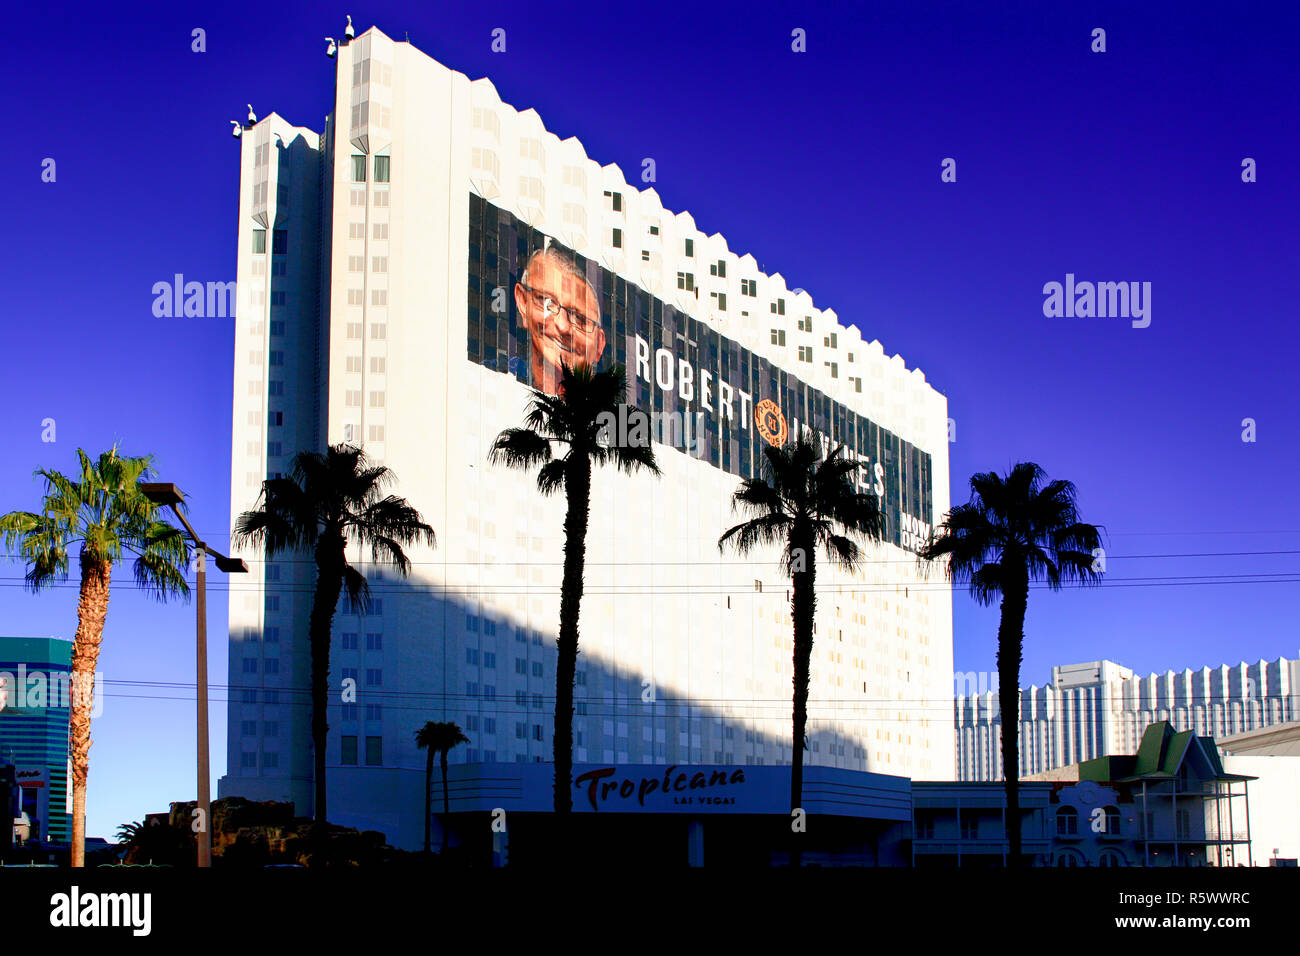 The Tropicana Hotel in Las Vegas, Nevada Stock Photo